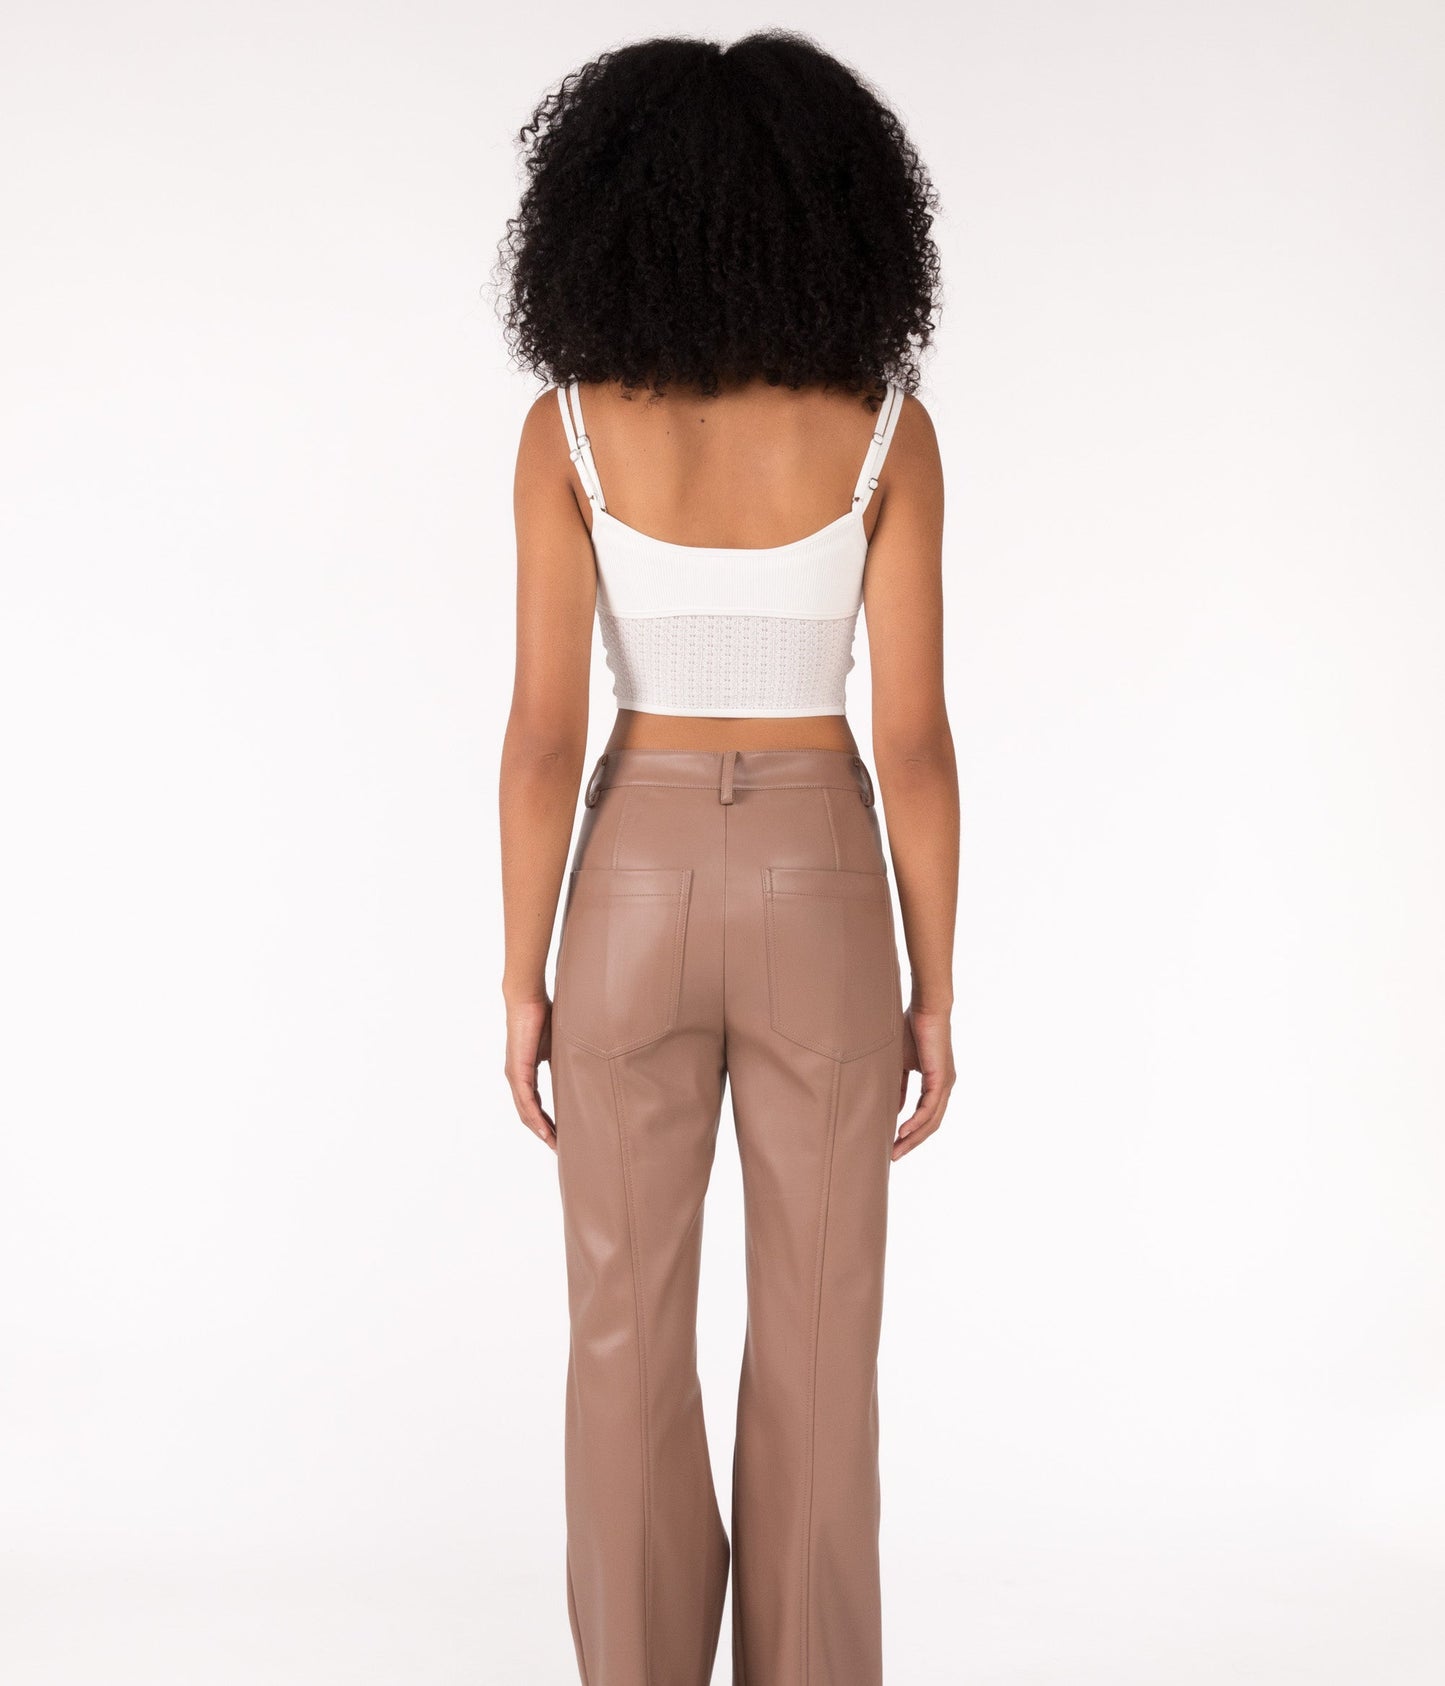 GWEN Women's High-Waisted Vegan Pants | Color: Black - variant::black